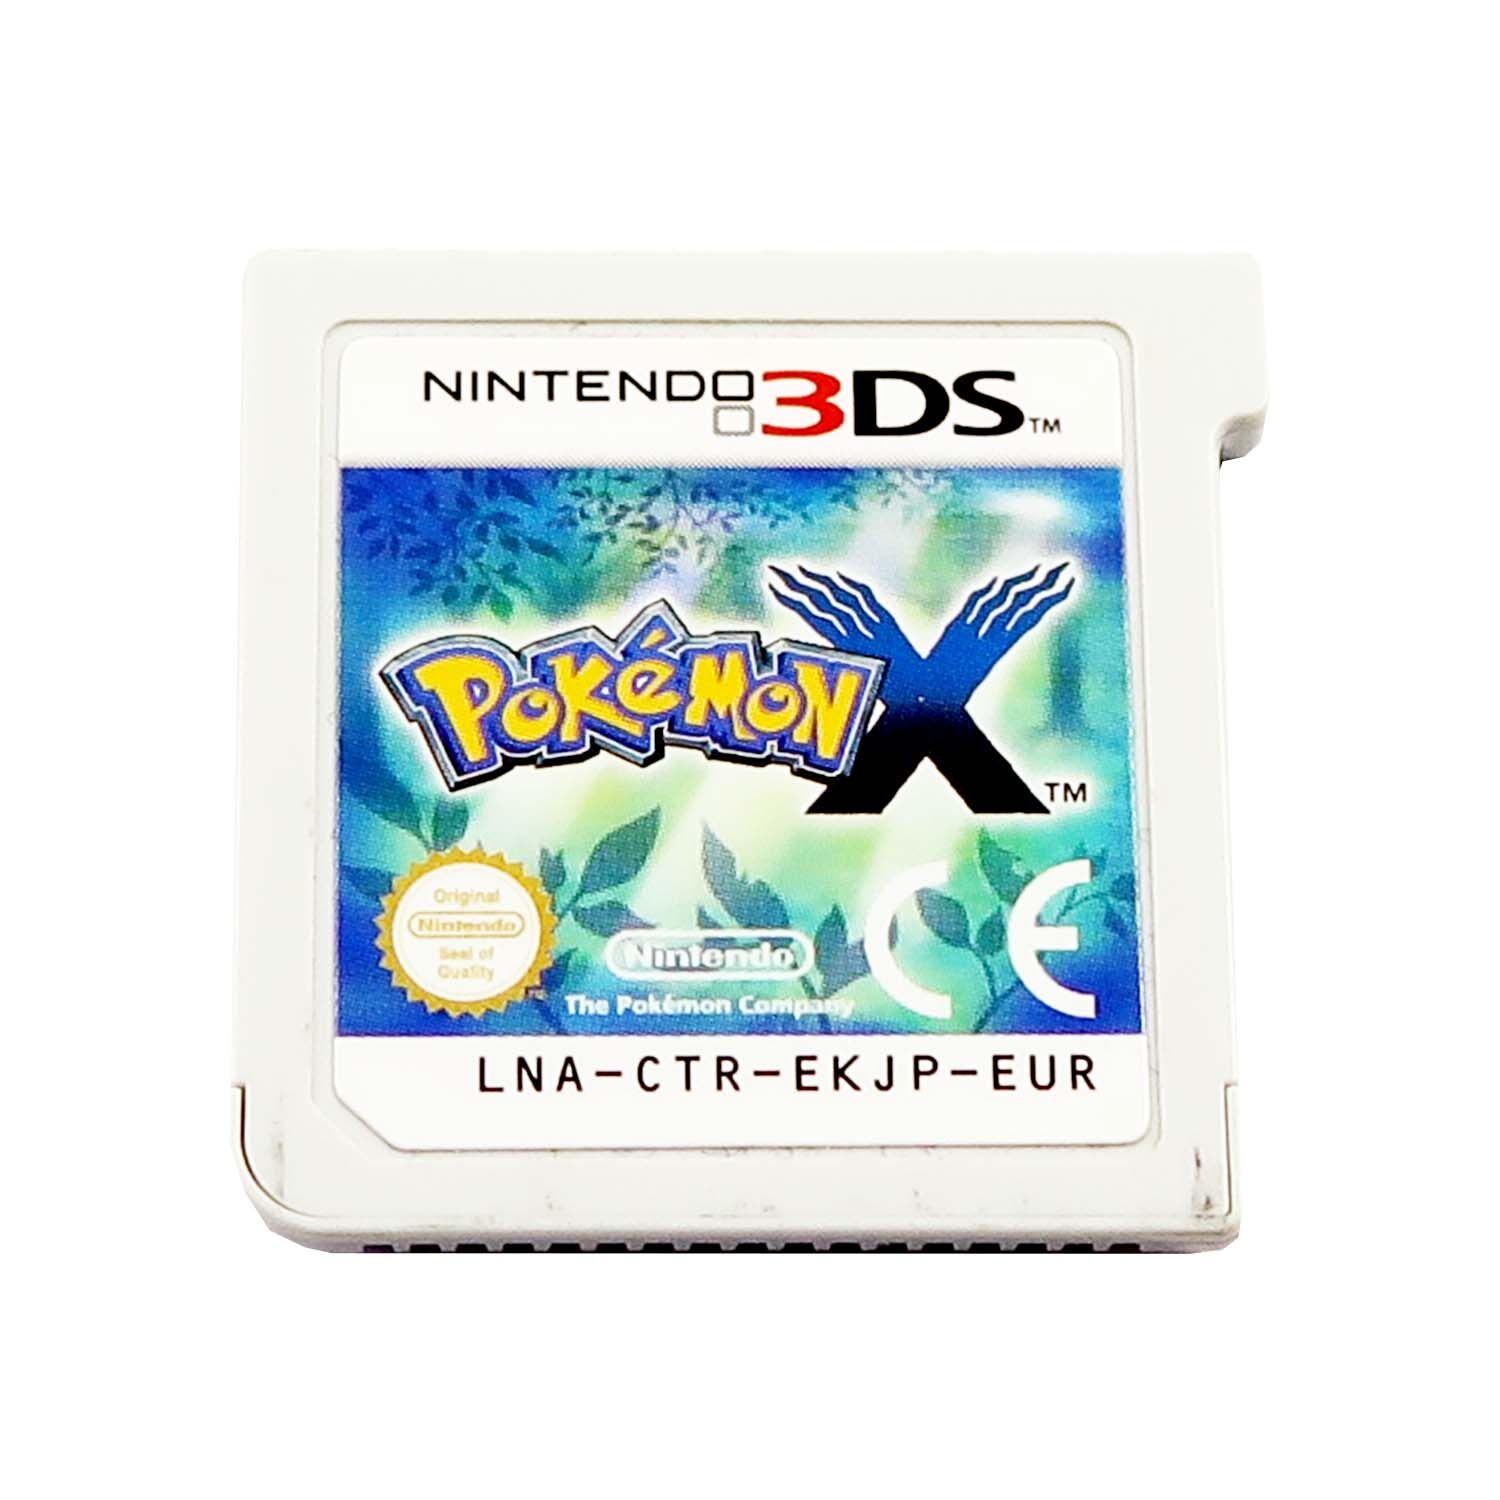 Pokémon X Edition - Nintendo 3DS